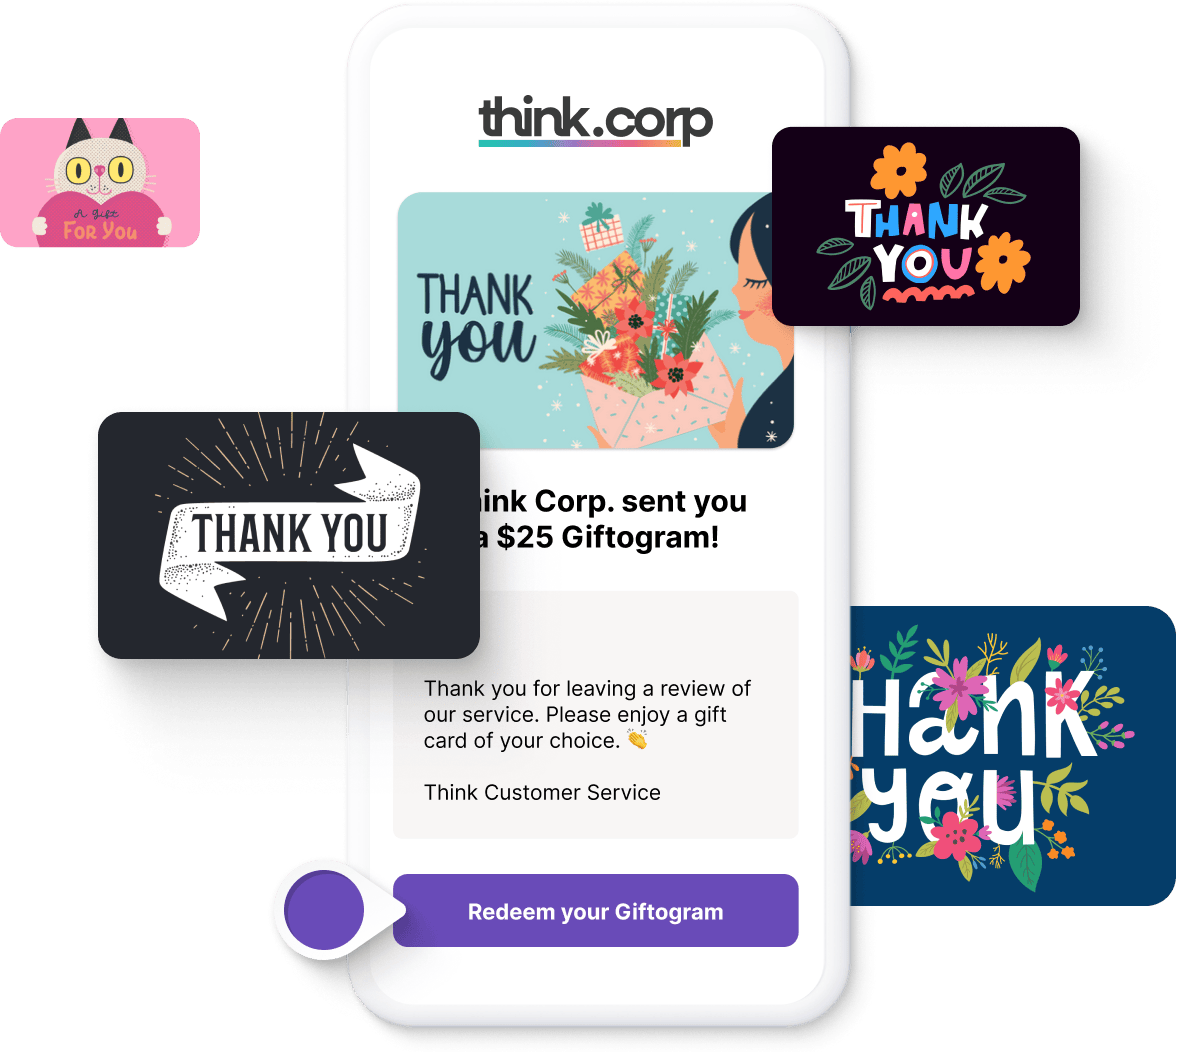 Custom branded gift card rewards